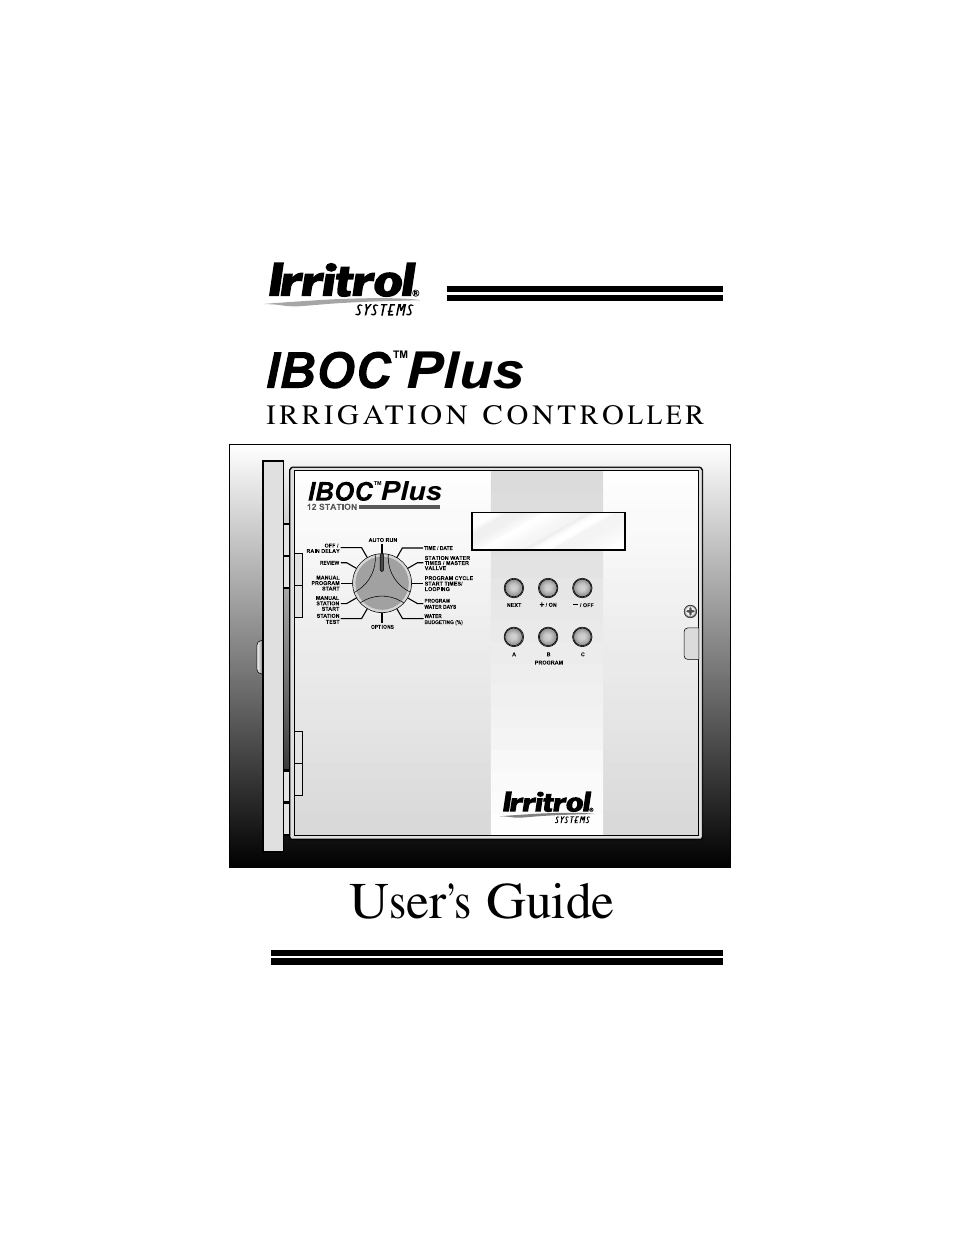 Irritrol IBOC-Plus User Manual | 28 pages